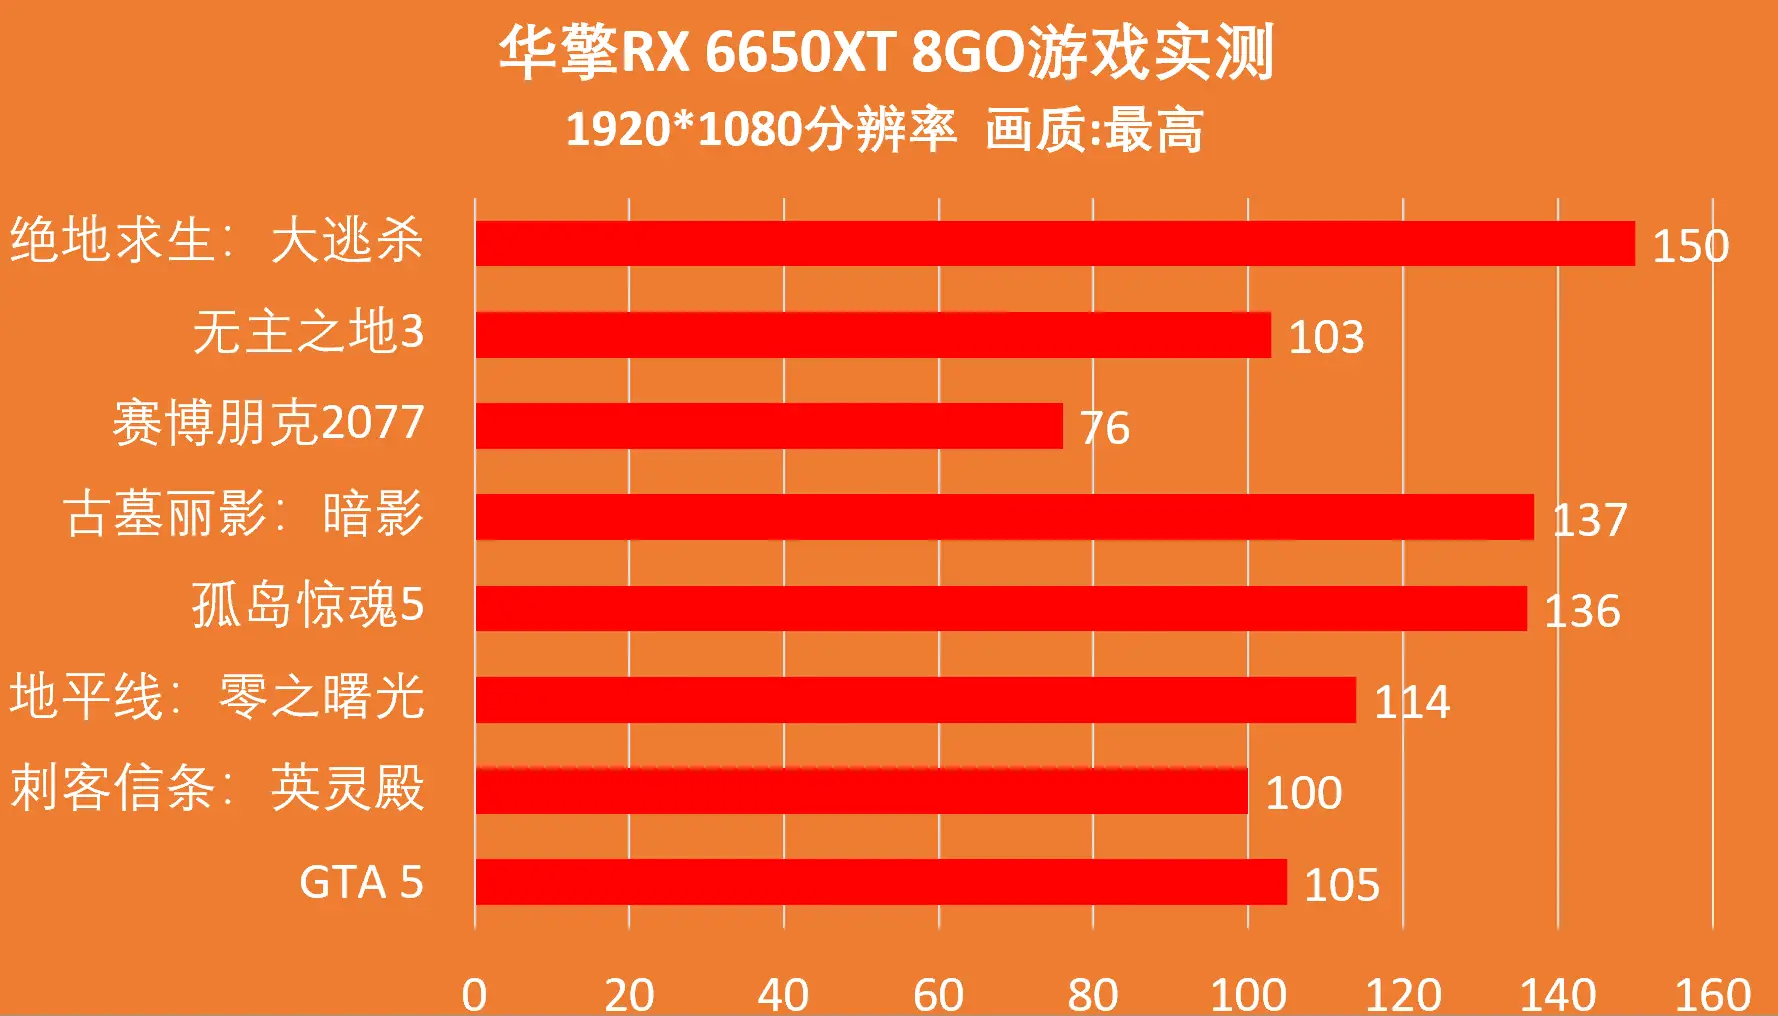 DDR5与DDR4内存模块比较：性能、成本与未来前景探讨  第2张